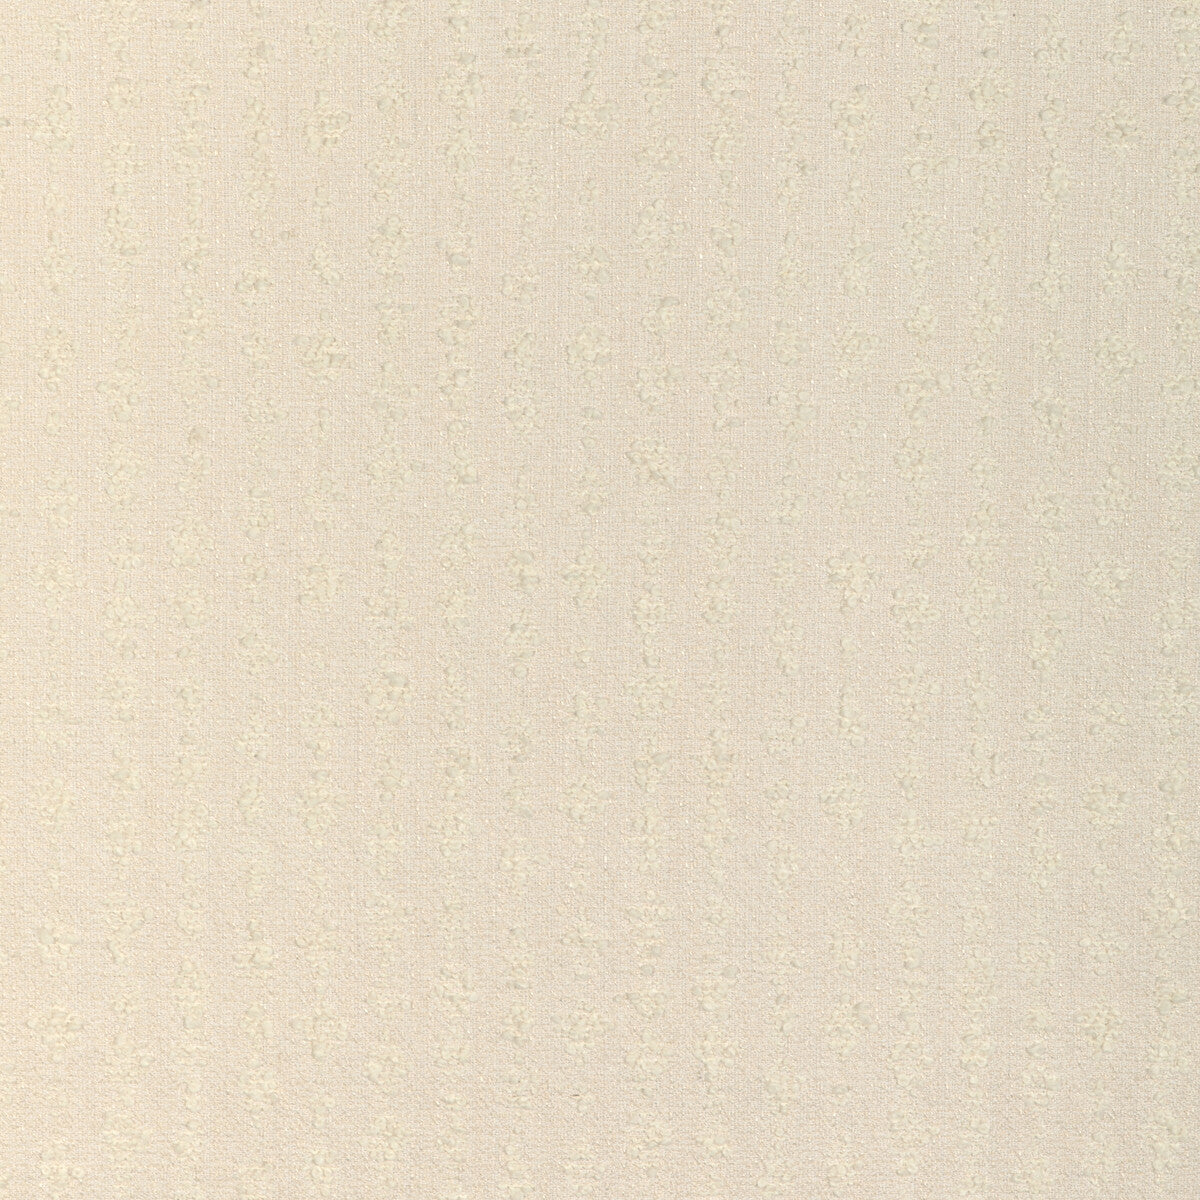 Serai fabric in vanilla color - pattern GWF-3795.111.0 - by Lee Jofa Modern in the Kelly Wearstler VIII collection